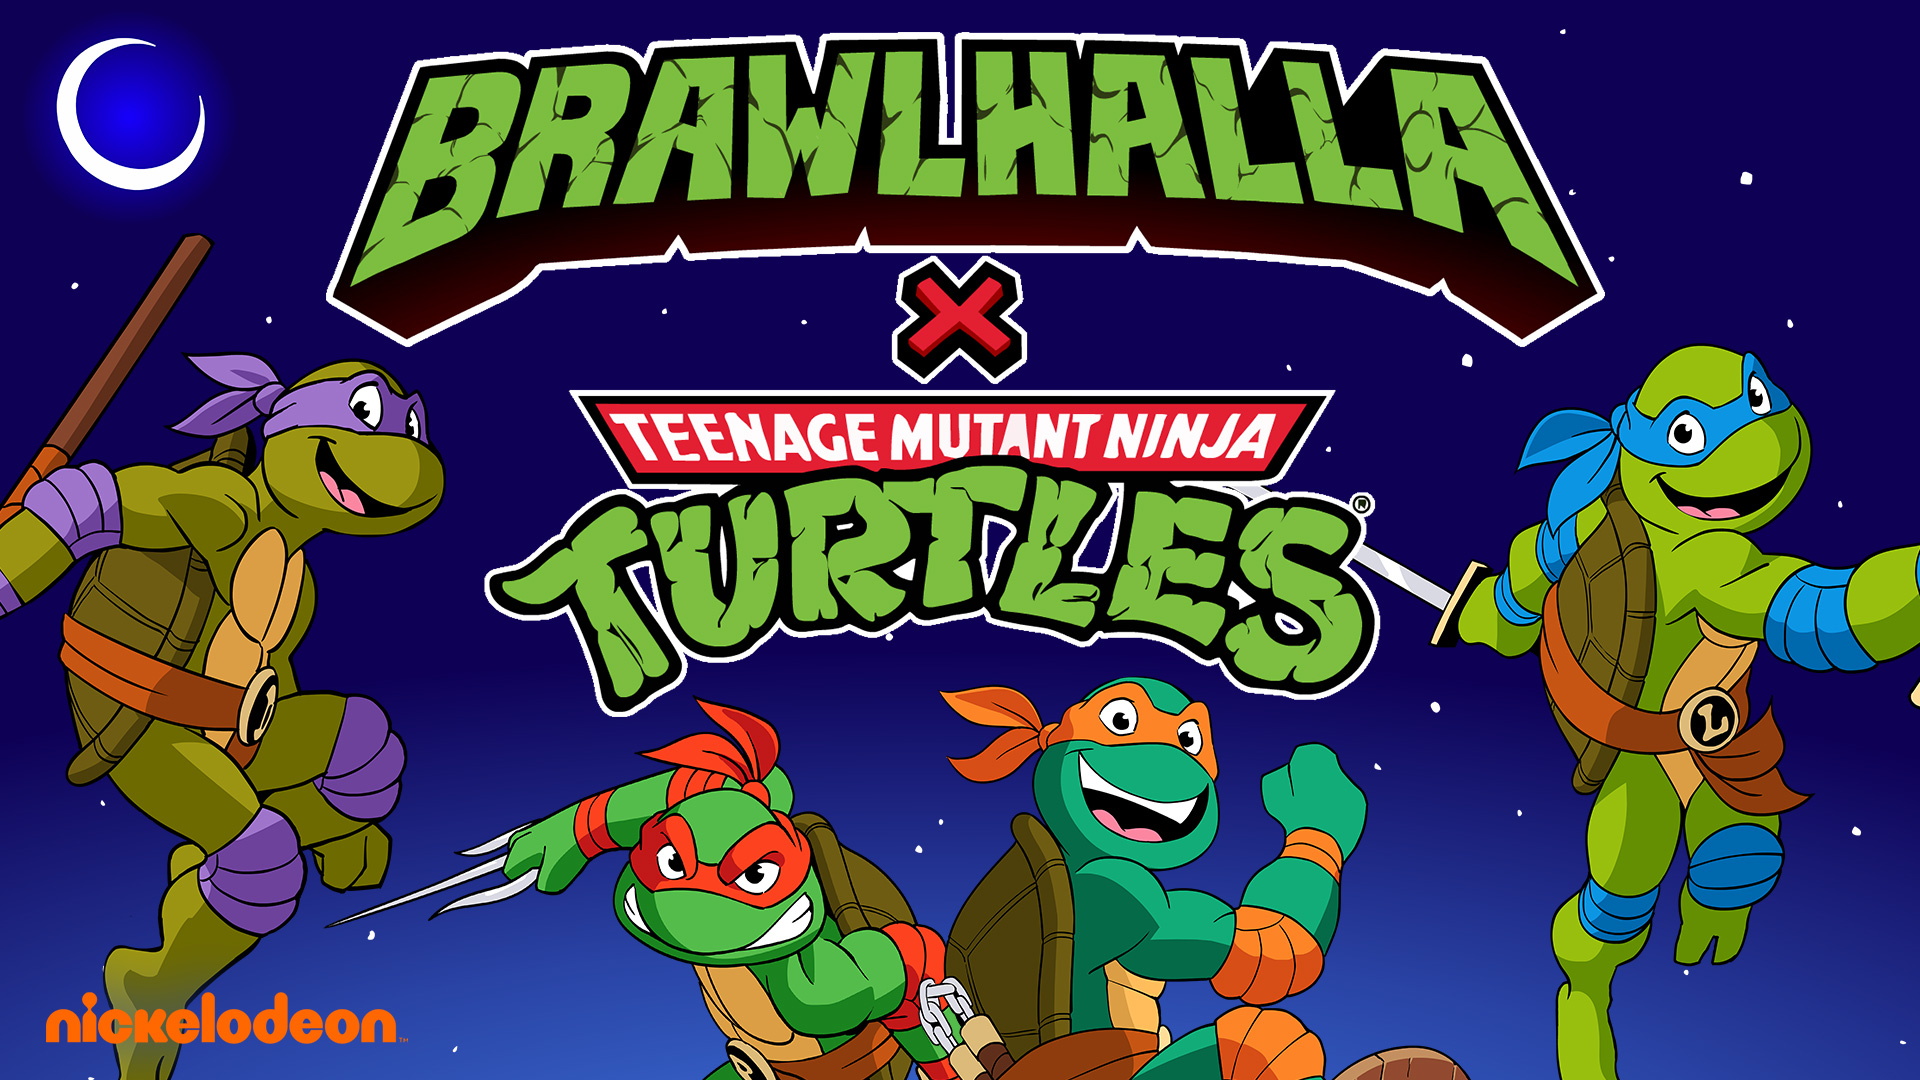 Brawlhalla X Teenage Mutant Ninja Turtles Wallpapers are here!